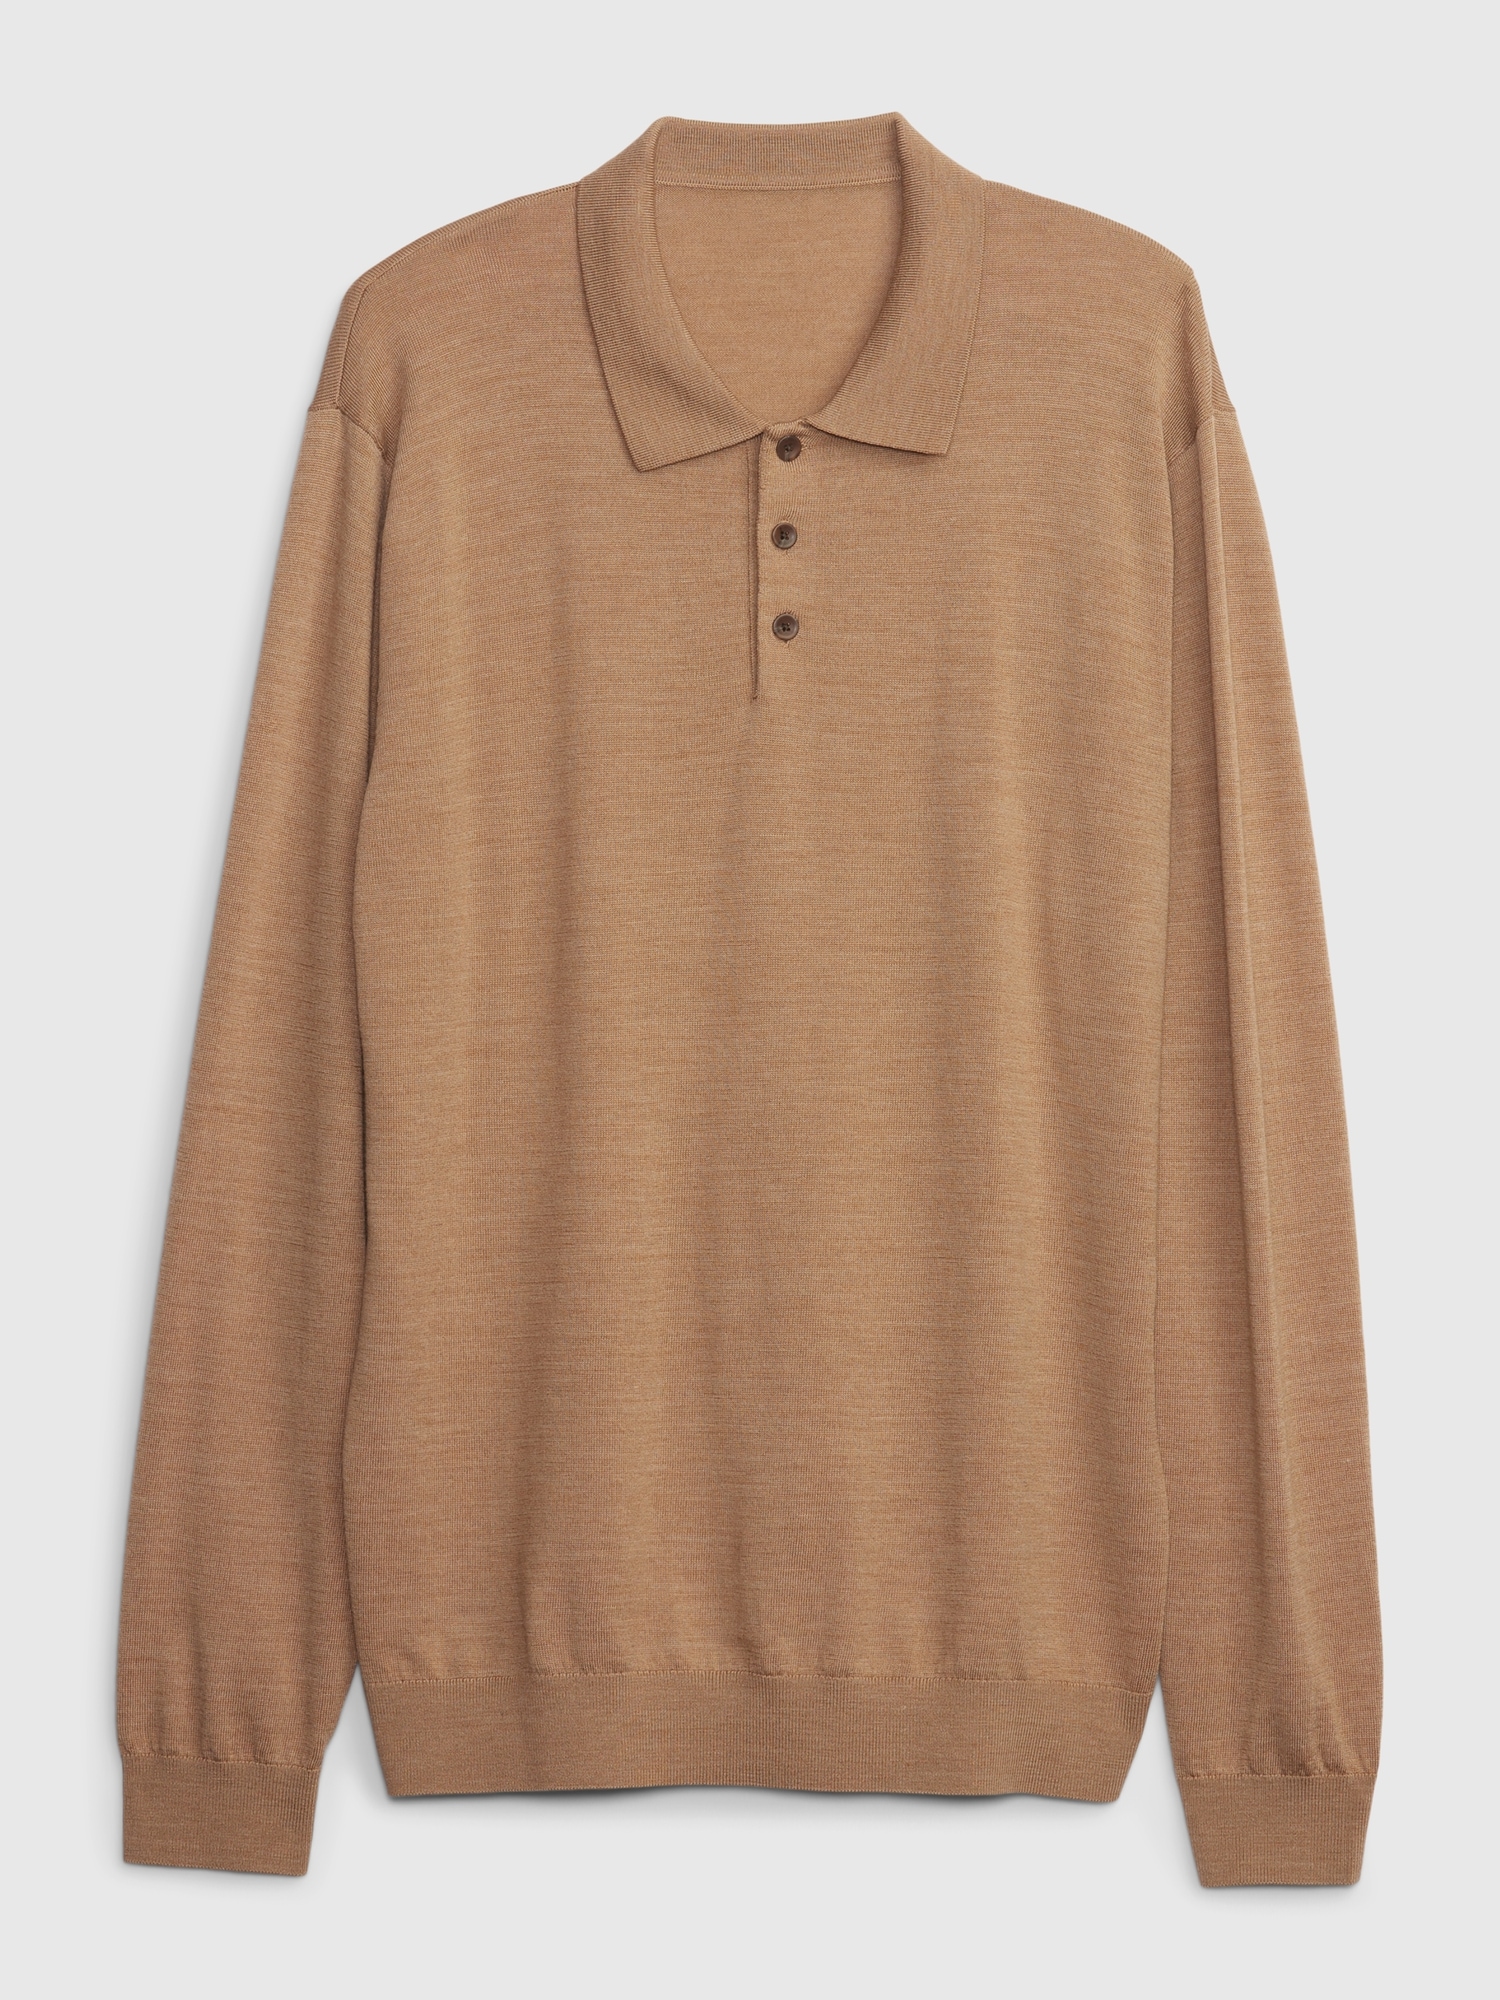 Merino Wool Polo Shirt | Gap